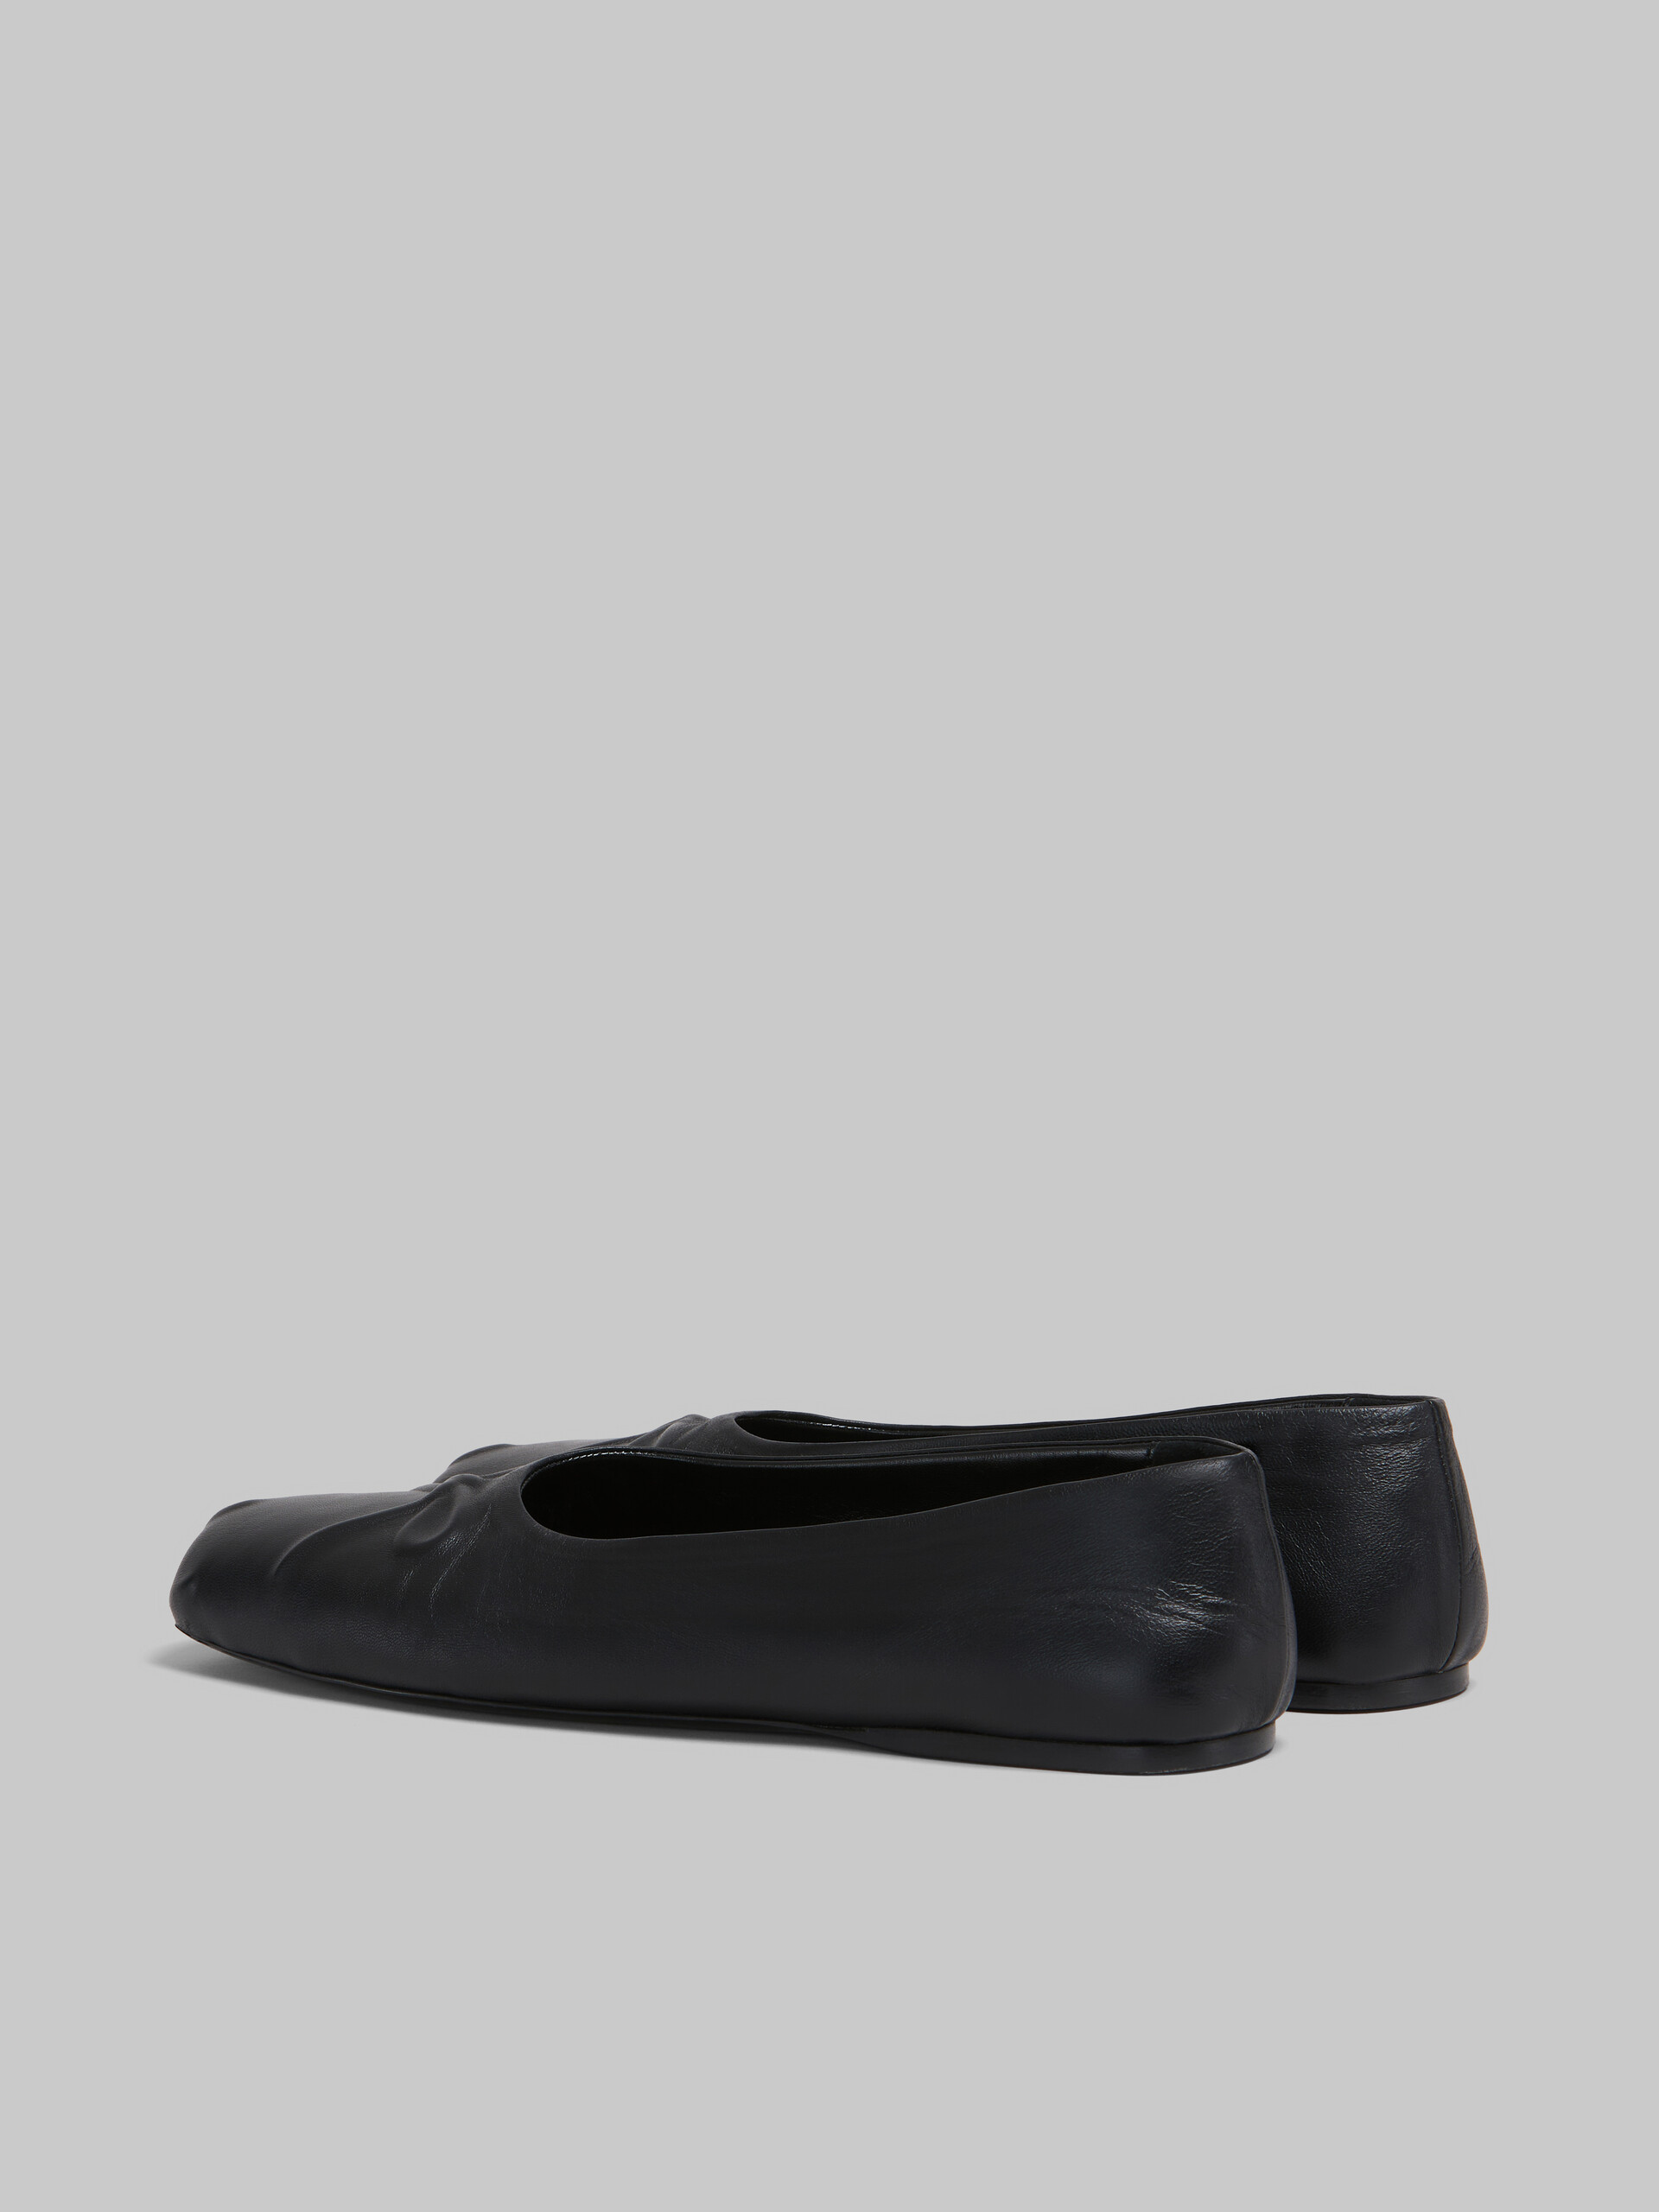 Black nappa leather Little Bow ballet flat - Ballet Shoes - Image 3